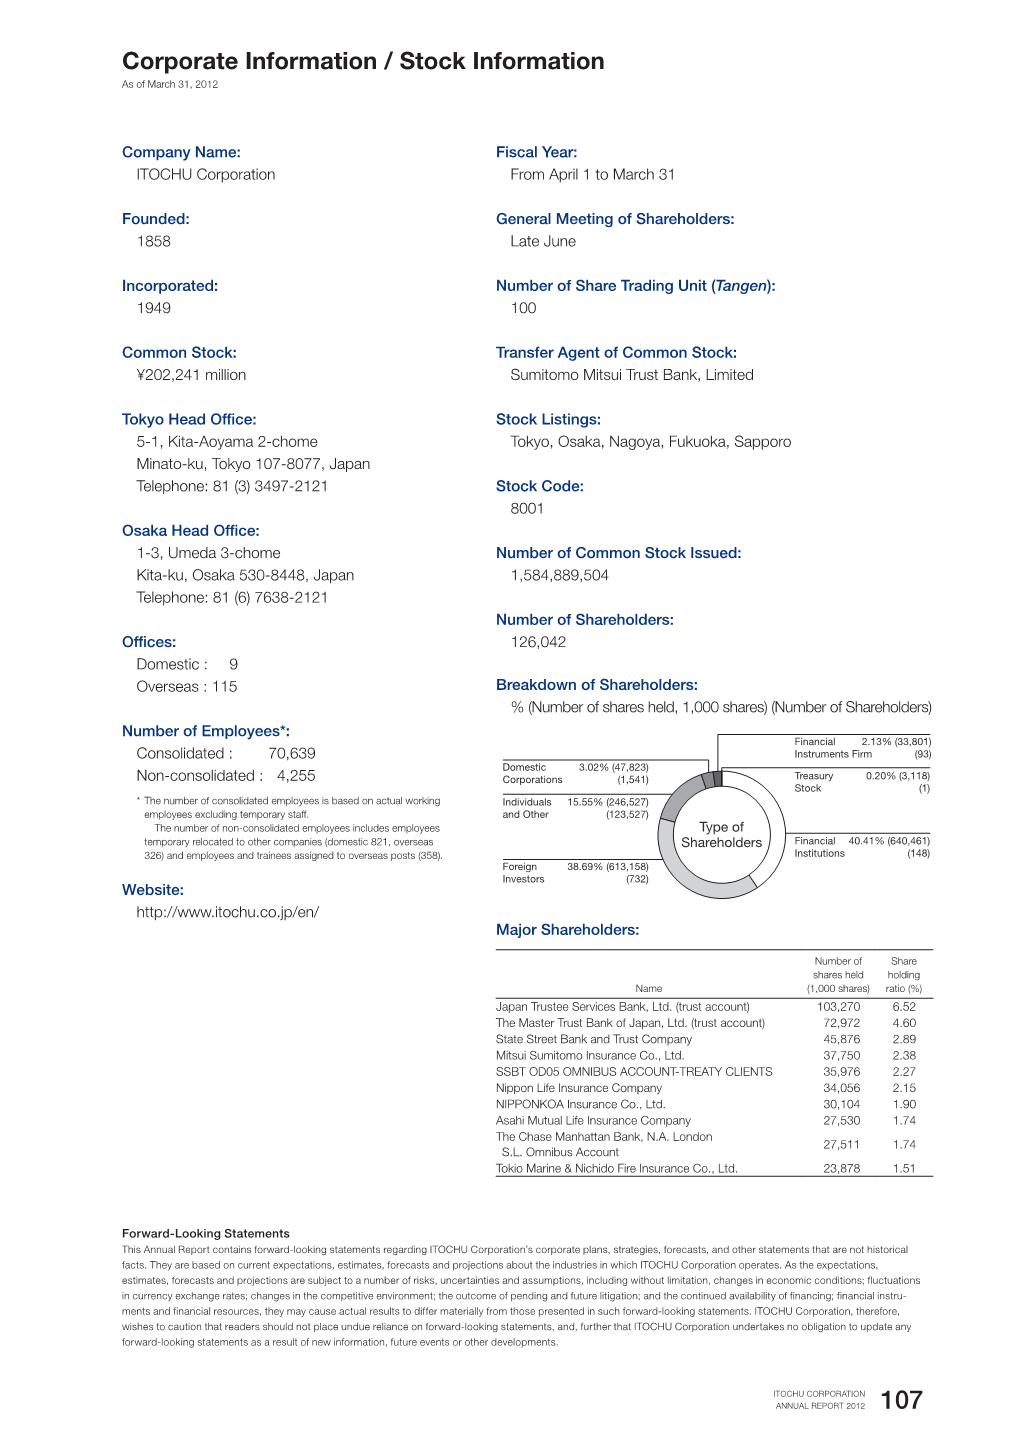 Corporate Information / Stock Information (PDF 38KB)